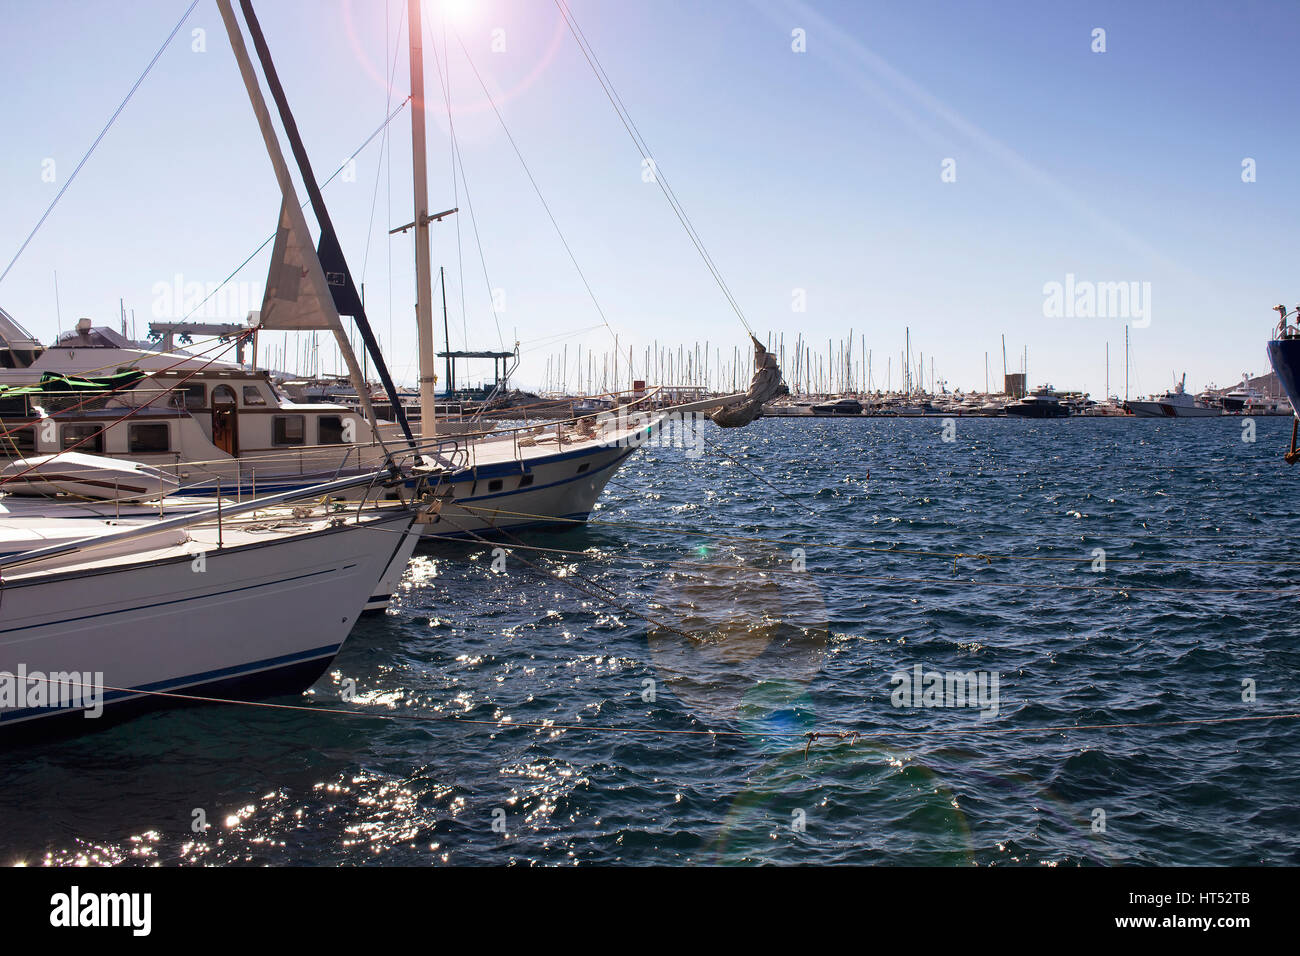 View of Yachts (sailing boats) parked at Yalikavak marina. Lens flare effects applied image. Stock Photo